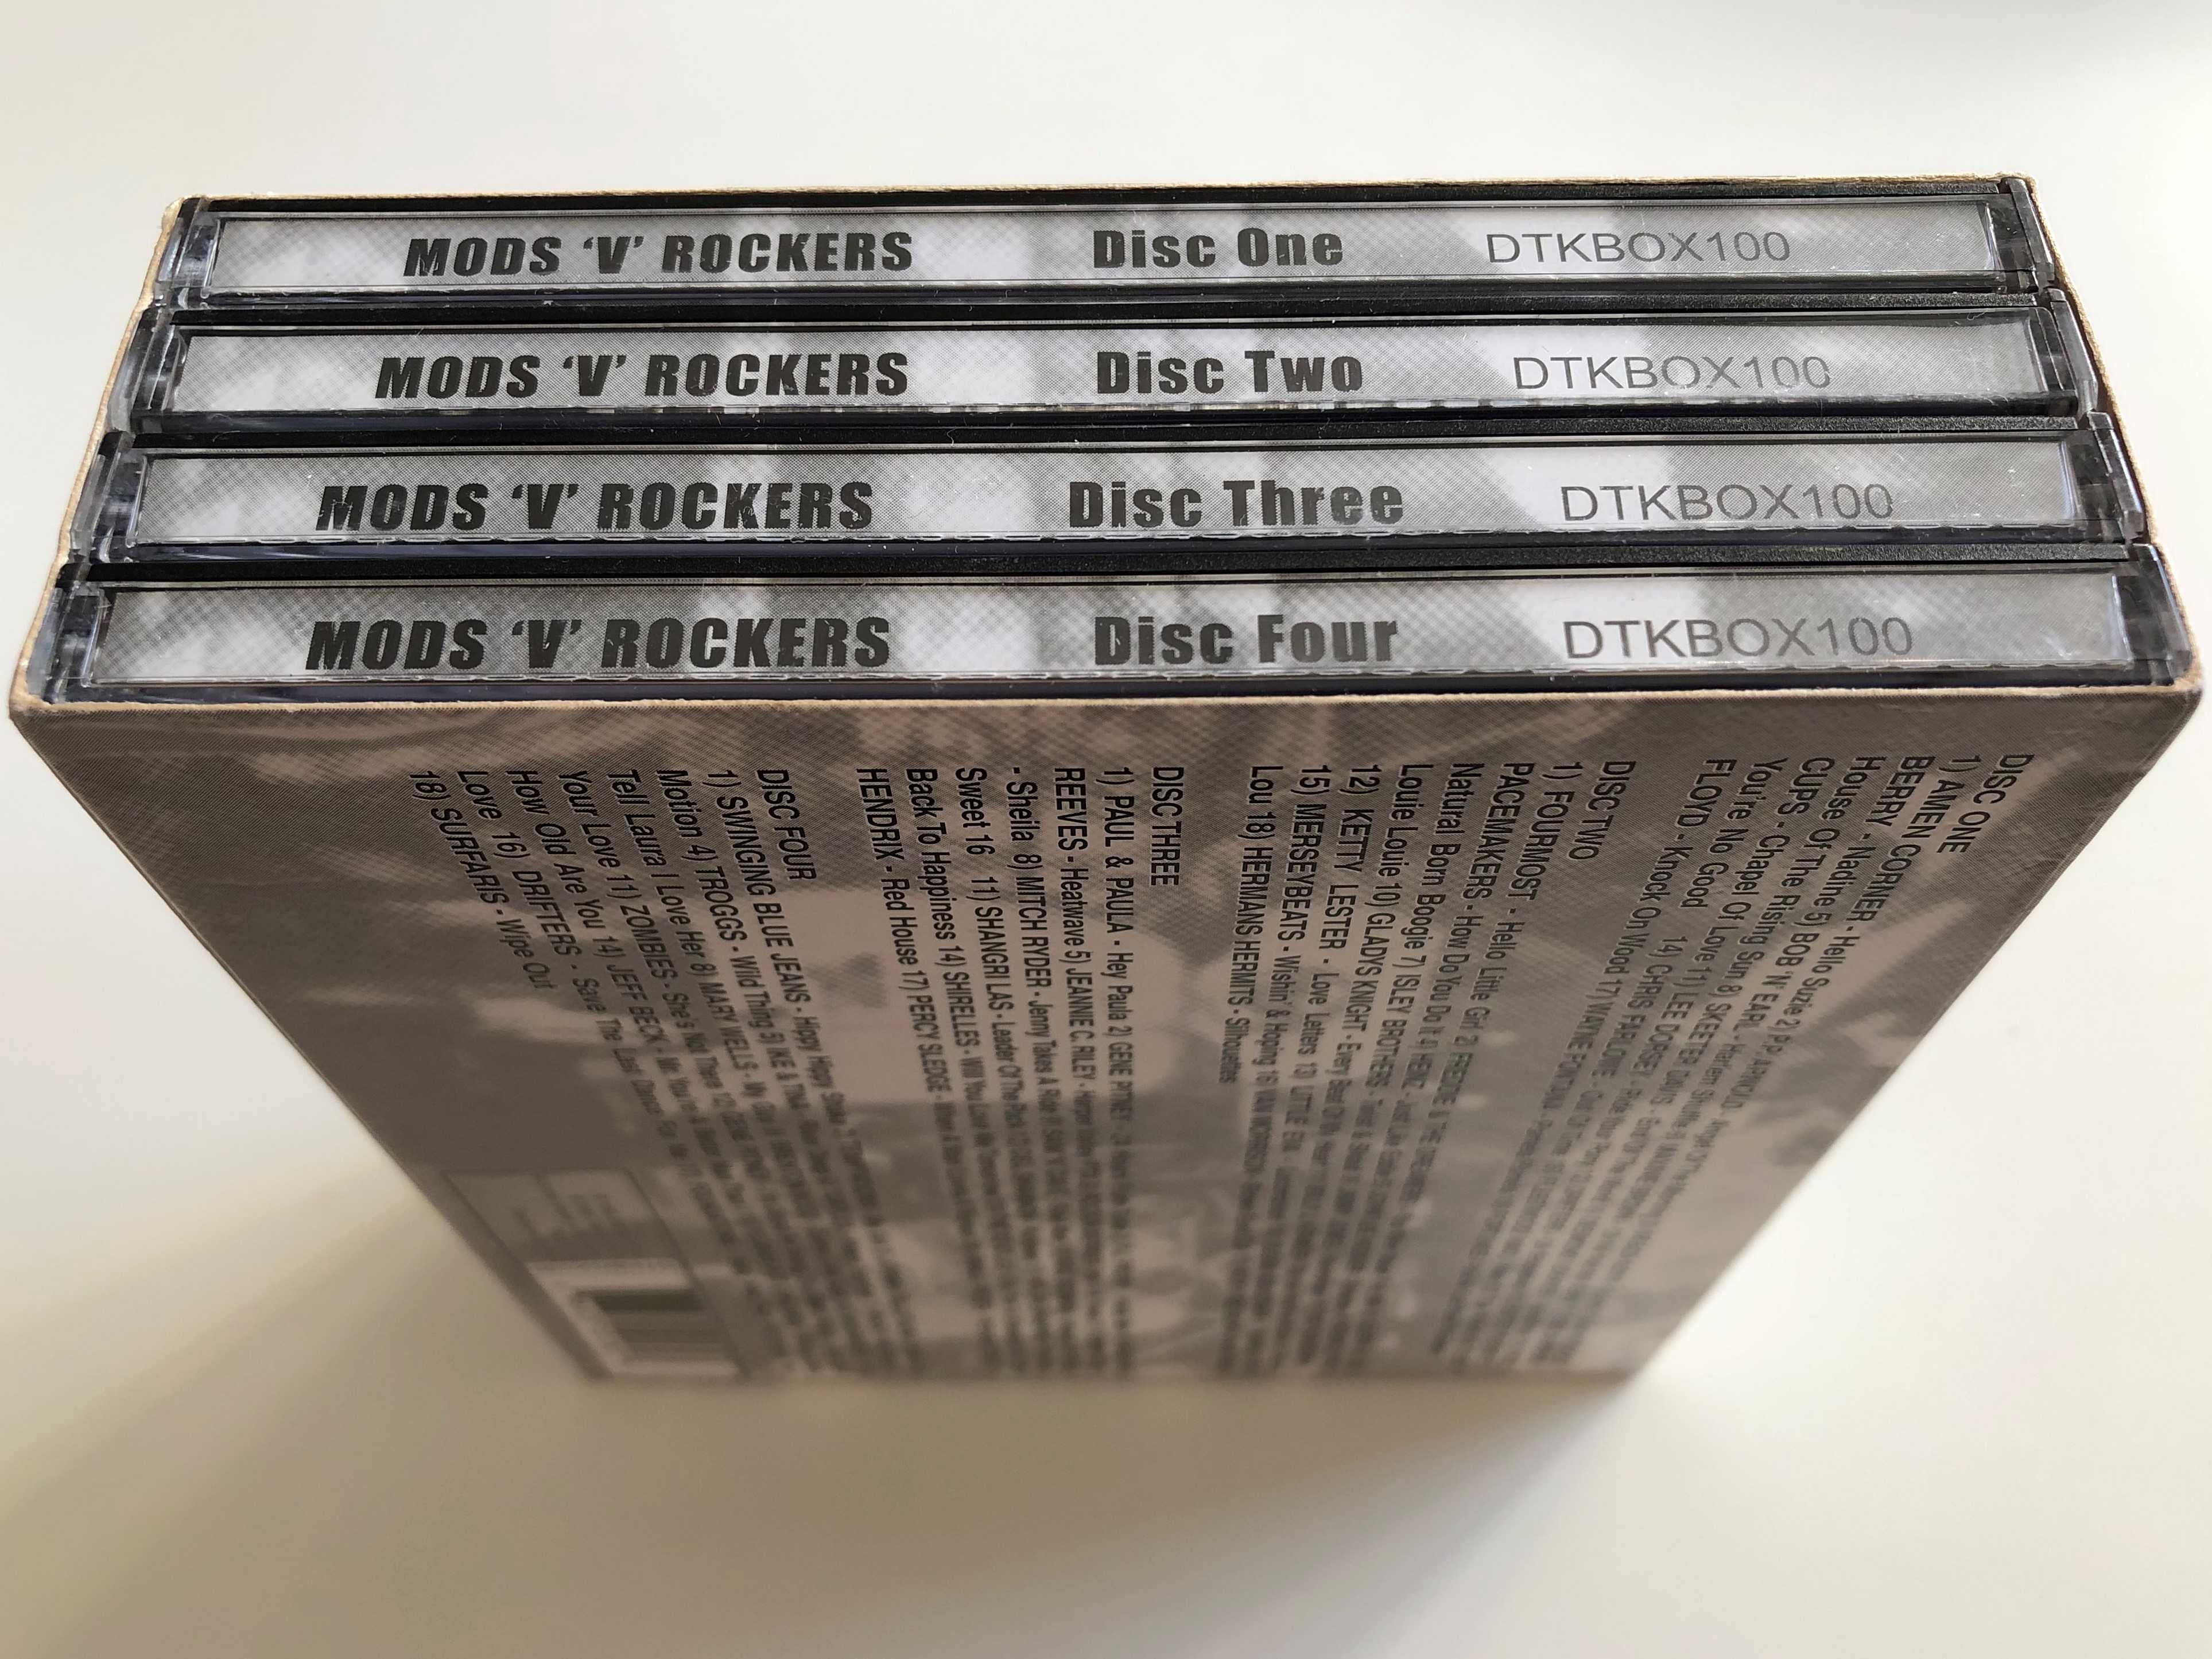 mods-v-rockers-eighty-classic-hits-from-the-sixties-small-faces-yardbirds-kingsmen-beach-boys-little-eva-bob-earl-eric-burdon-many-more-dressed-to-kill-4x-audio-cd-set-1998-dtk.jpg